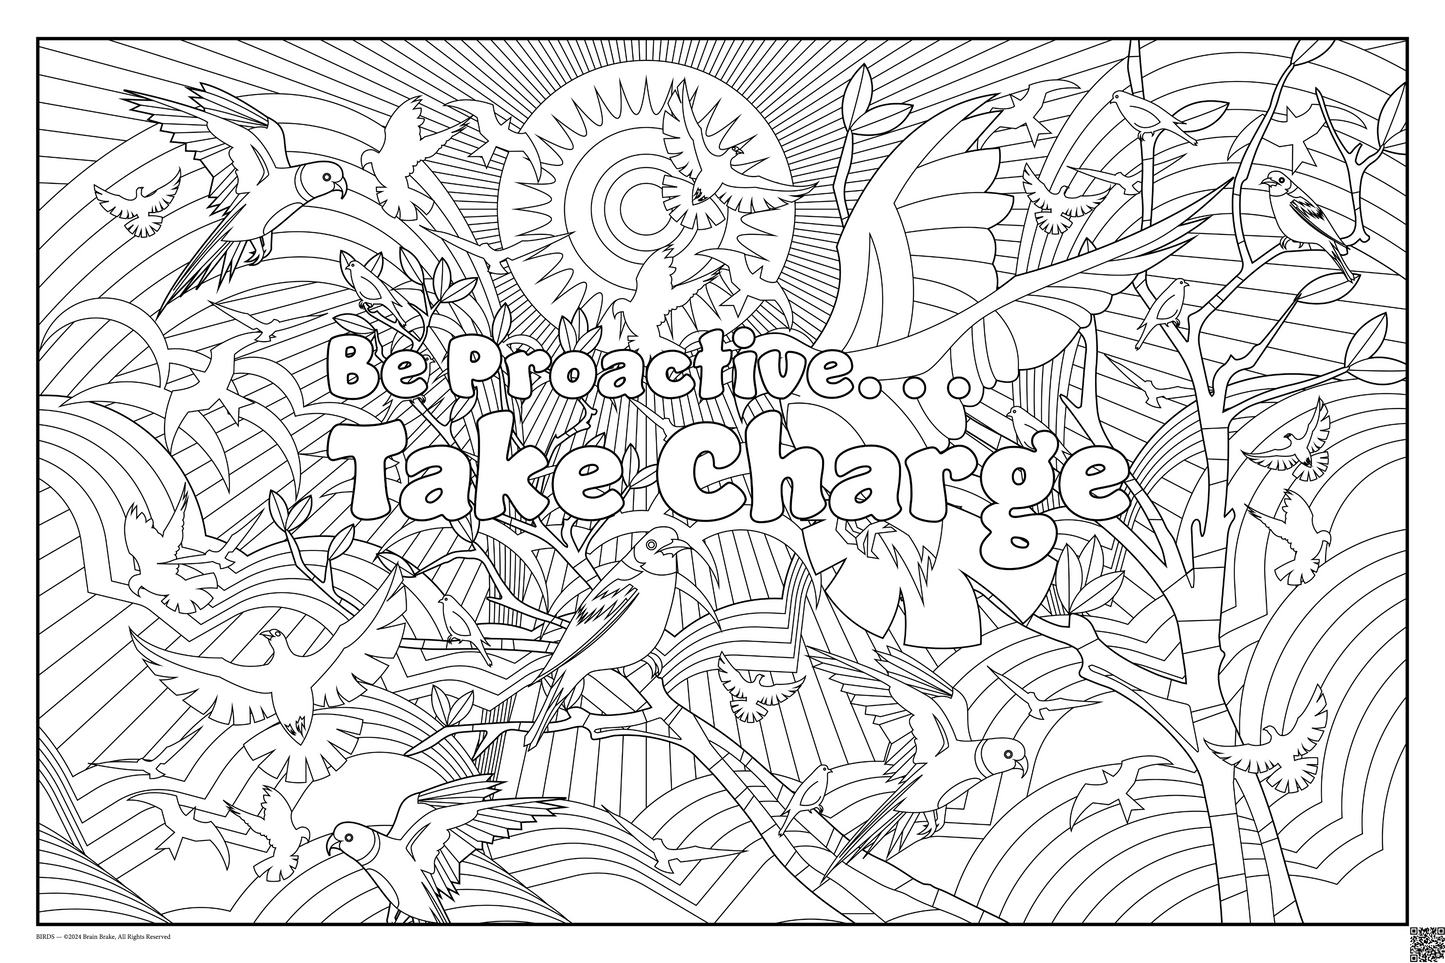 Calming Corner: Be Proactive...Take Charge